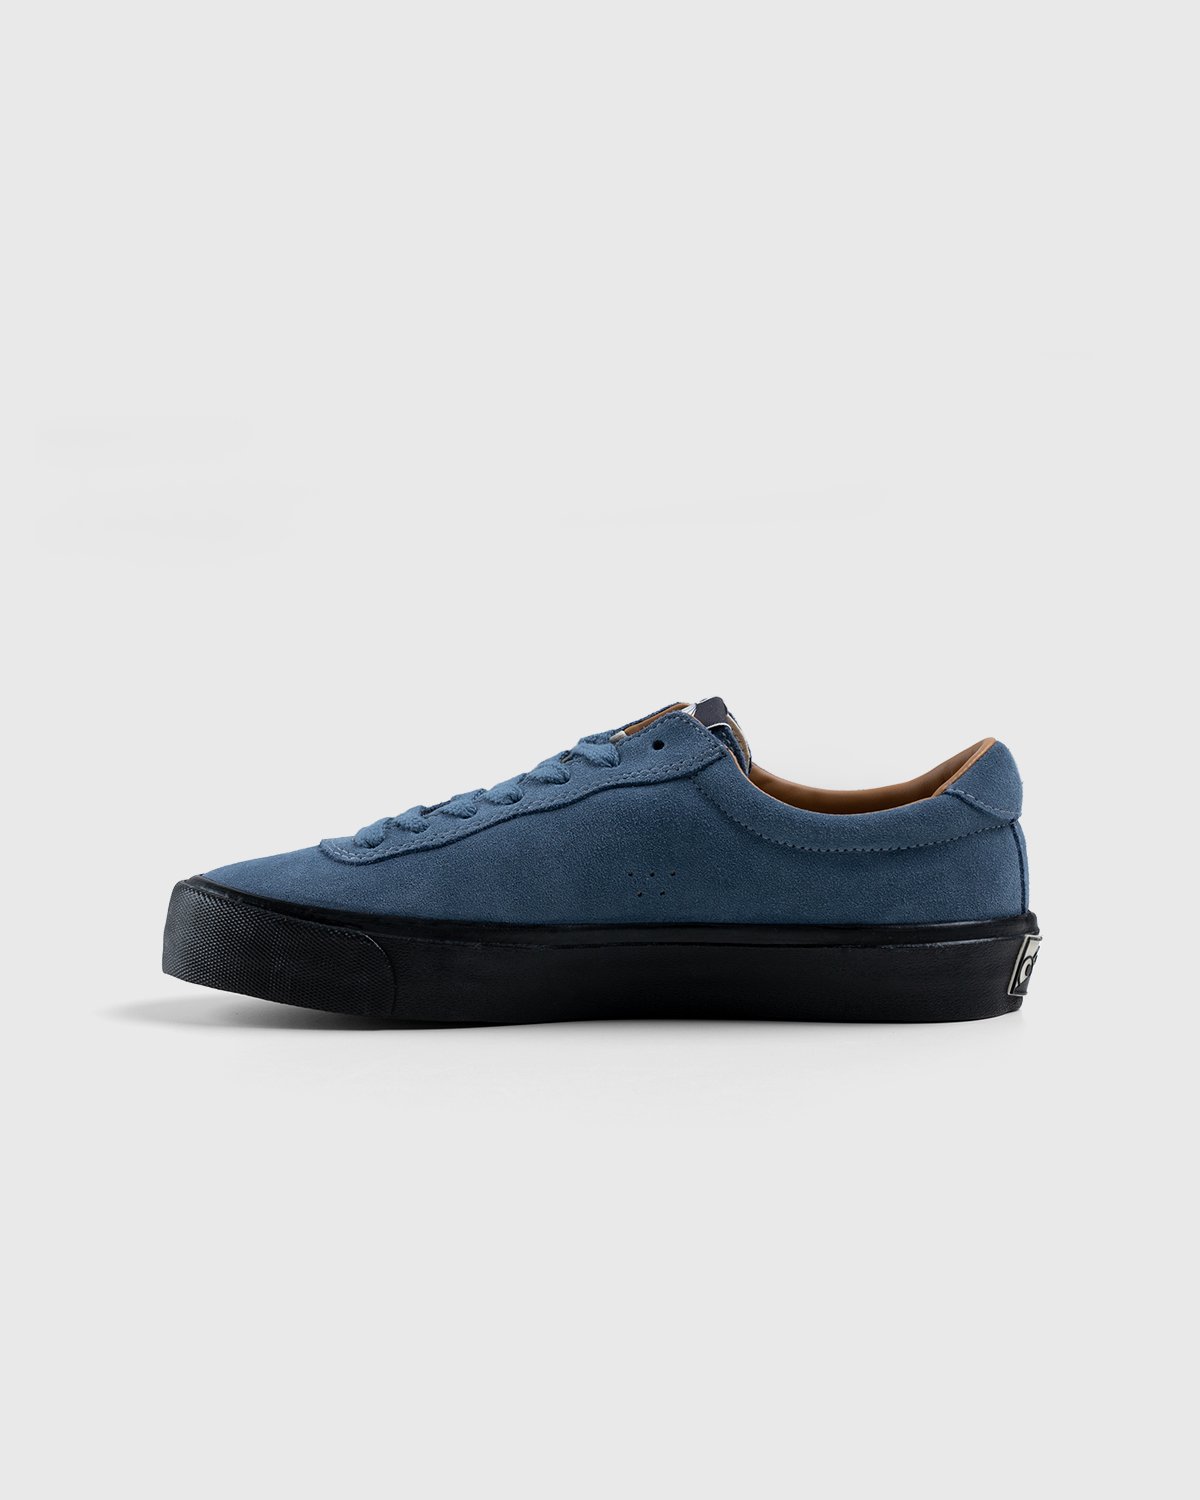 Last Resort AB - VM001 Suede Lo Blue/Black - Footwear - Blue - Image 2